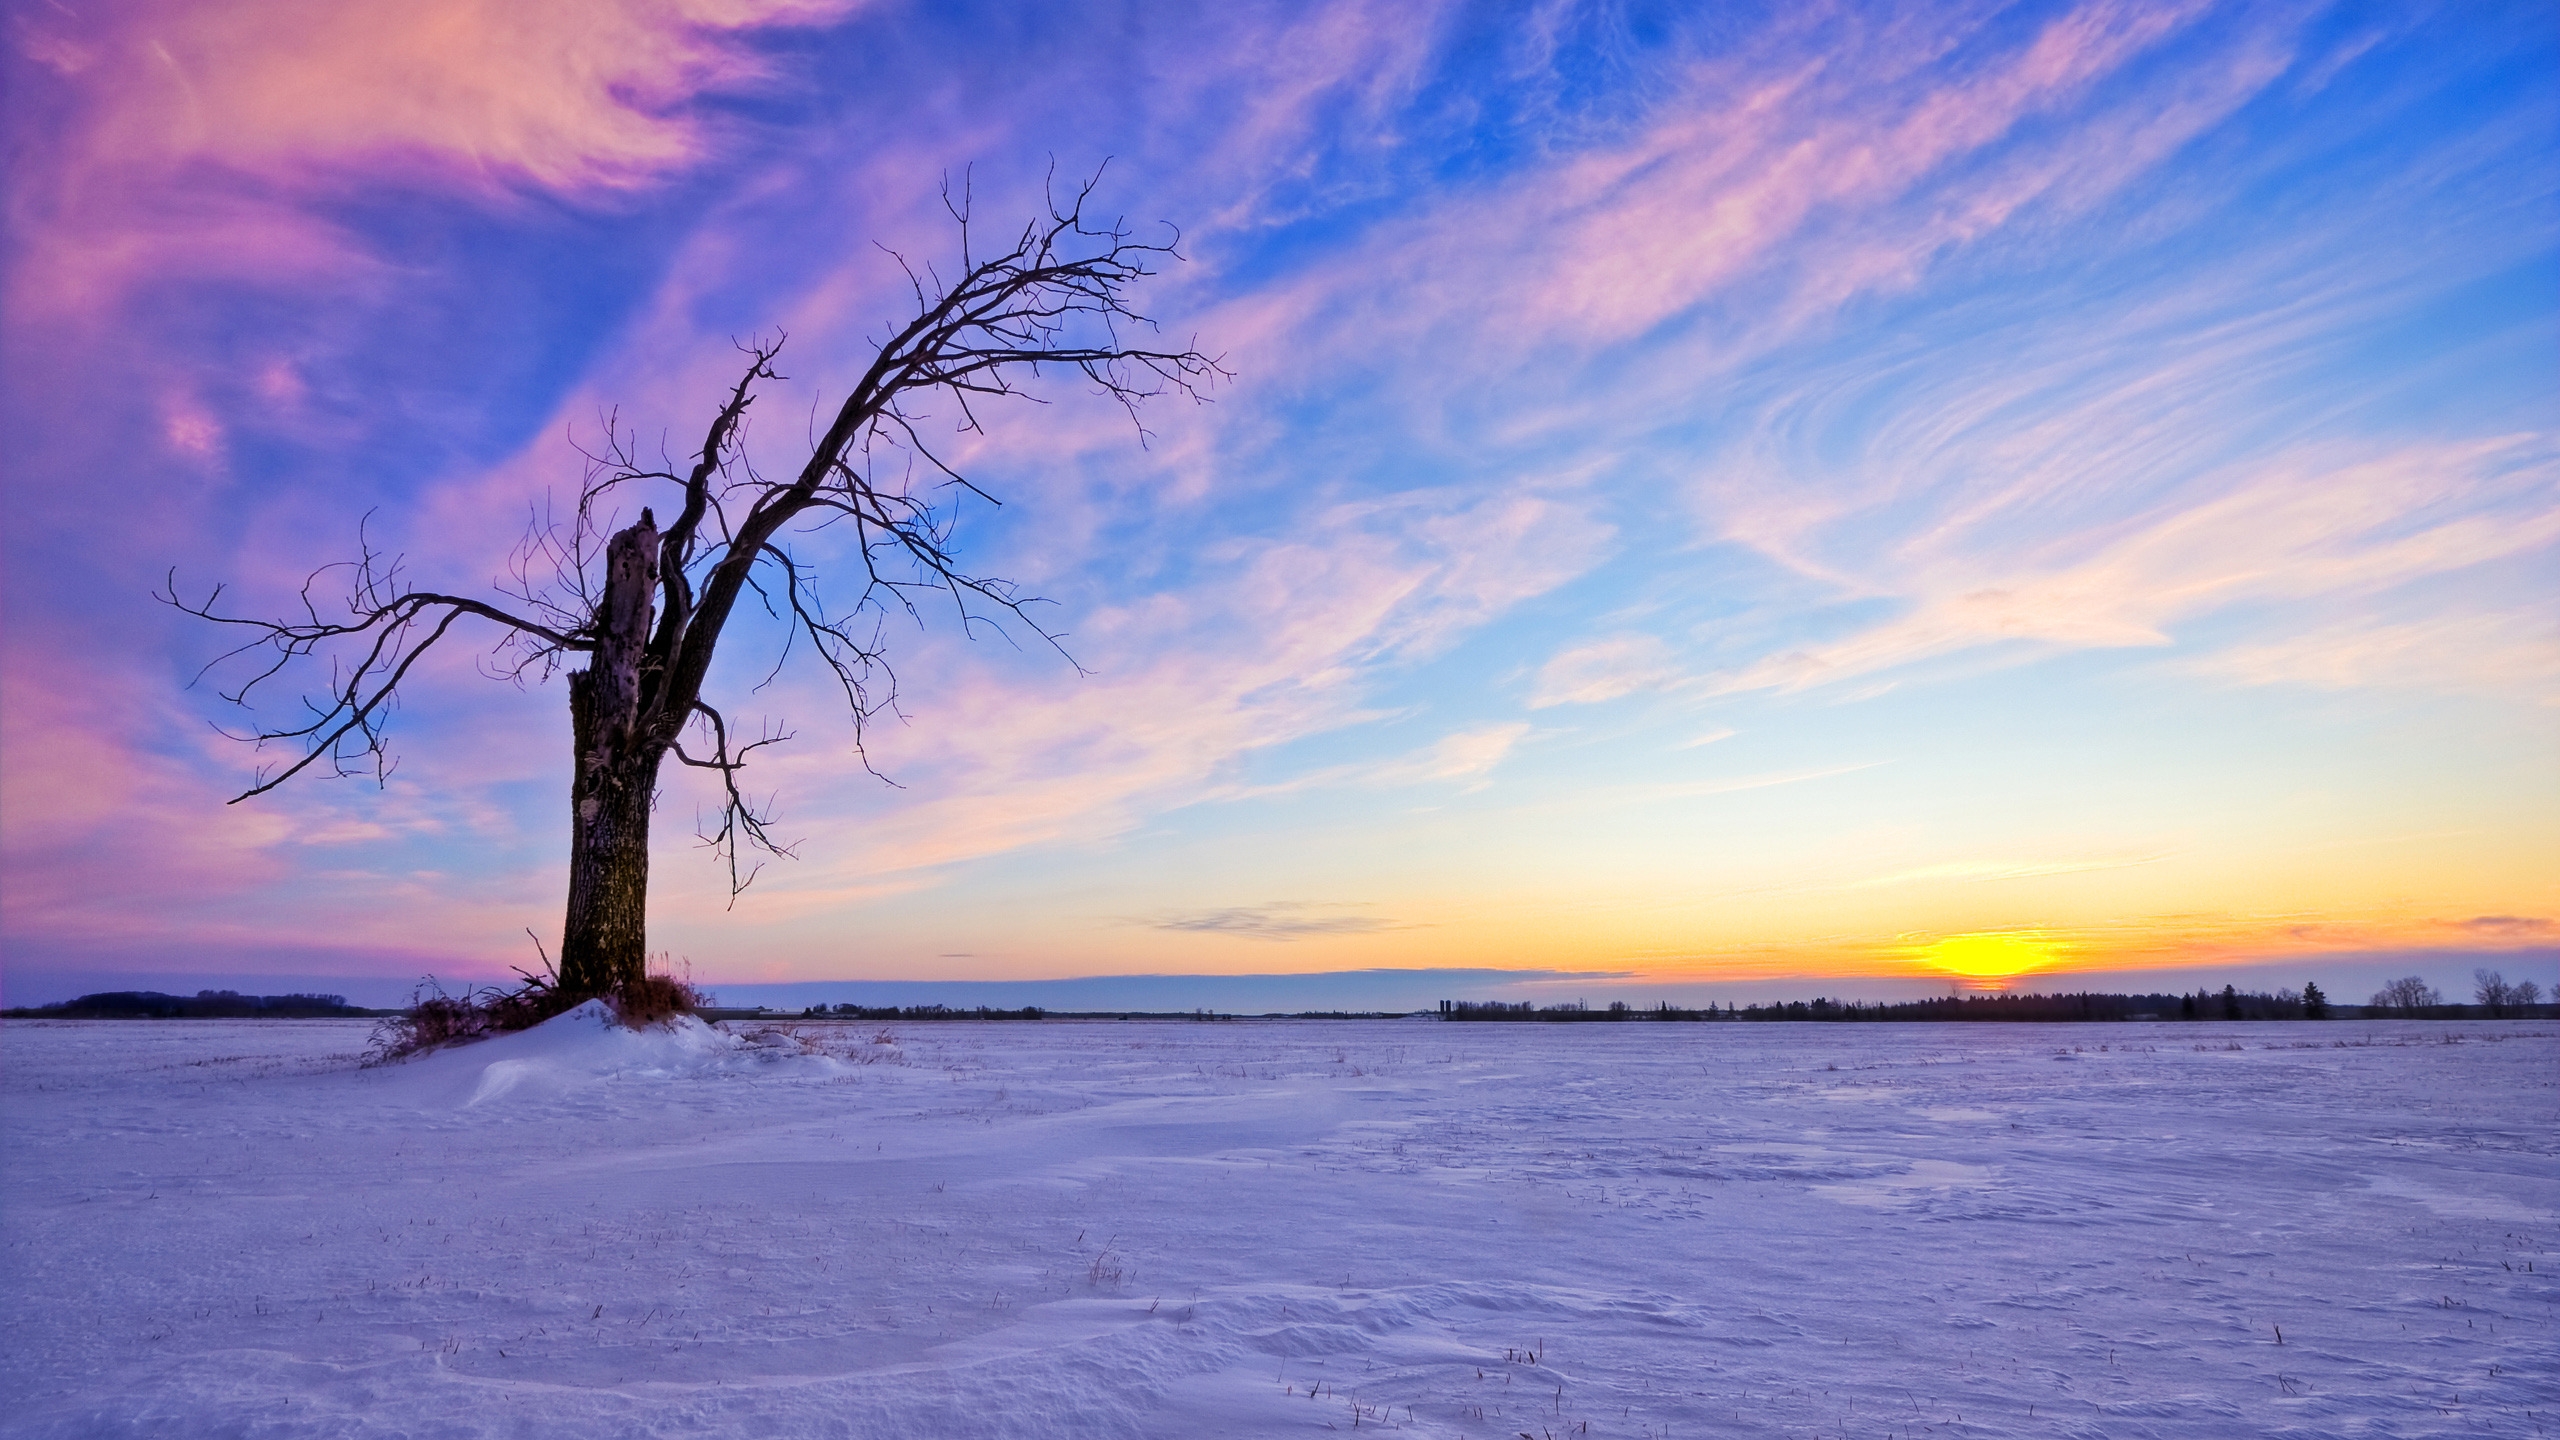 Beautiful Winter Sunset for 2560x1440 HDTV resolution